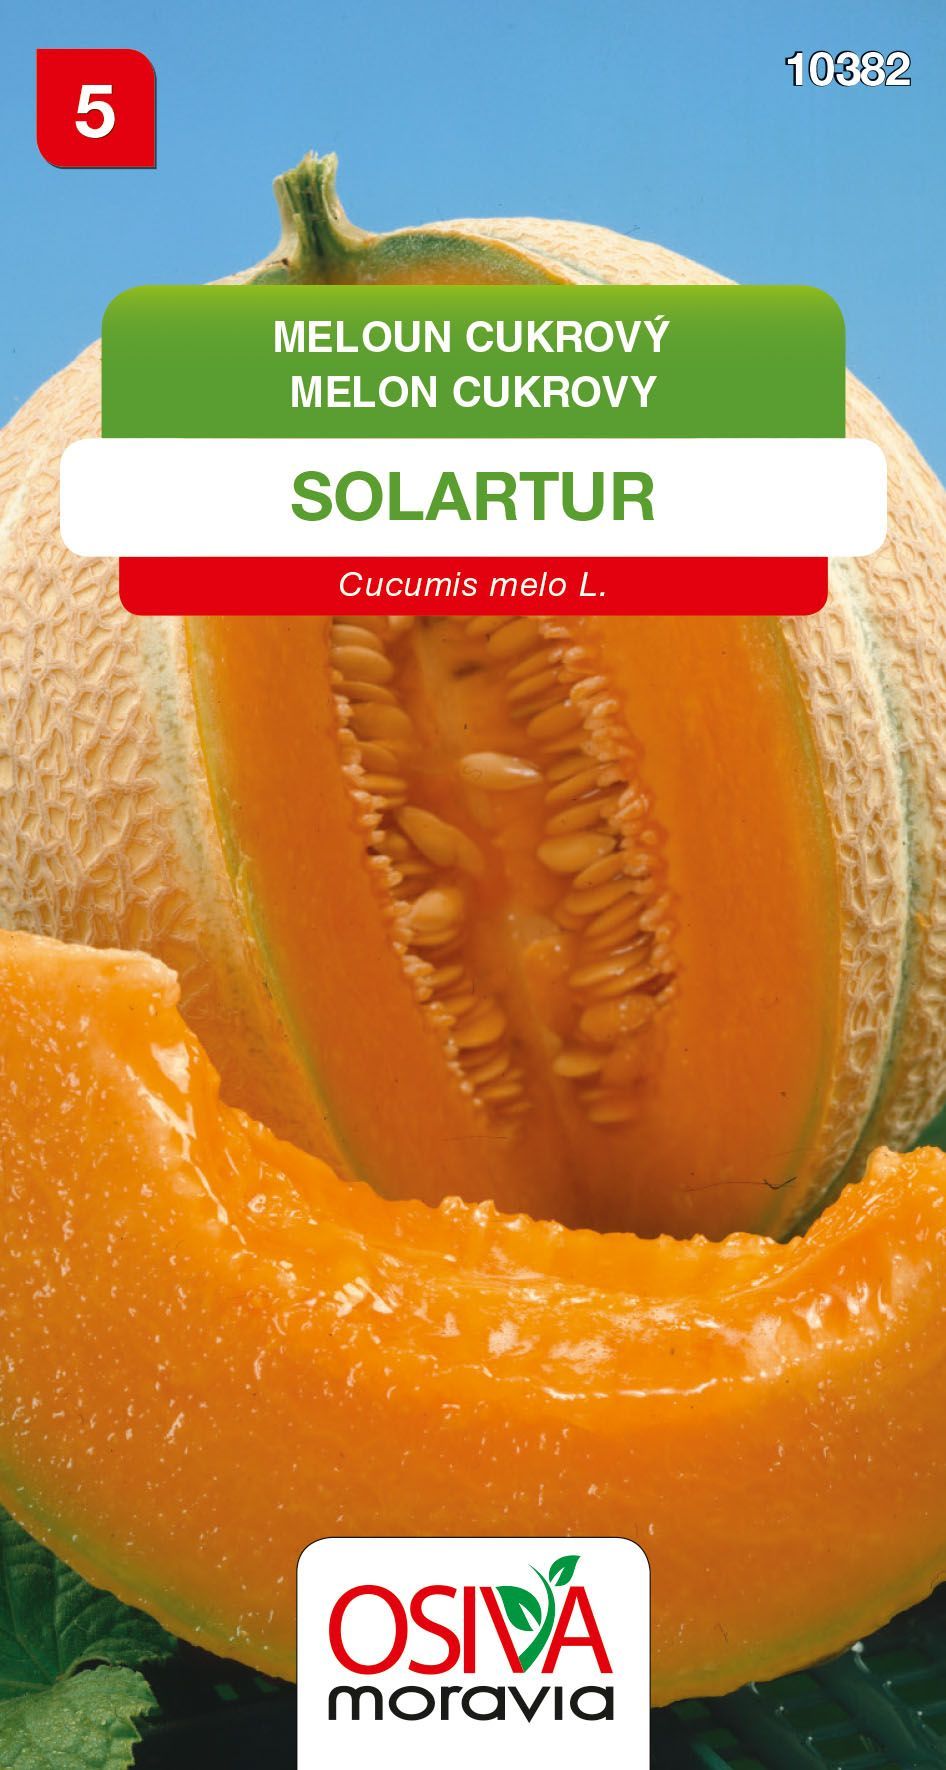 Meloun cukrový - Solartur